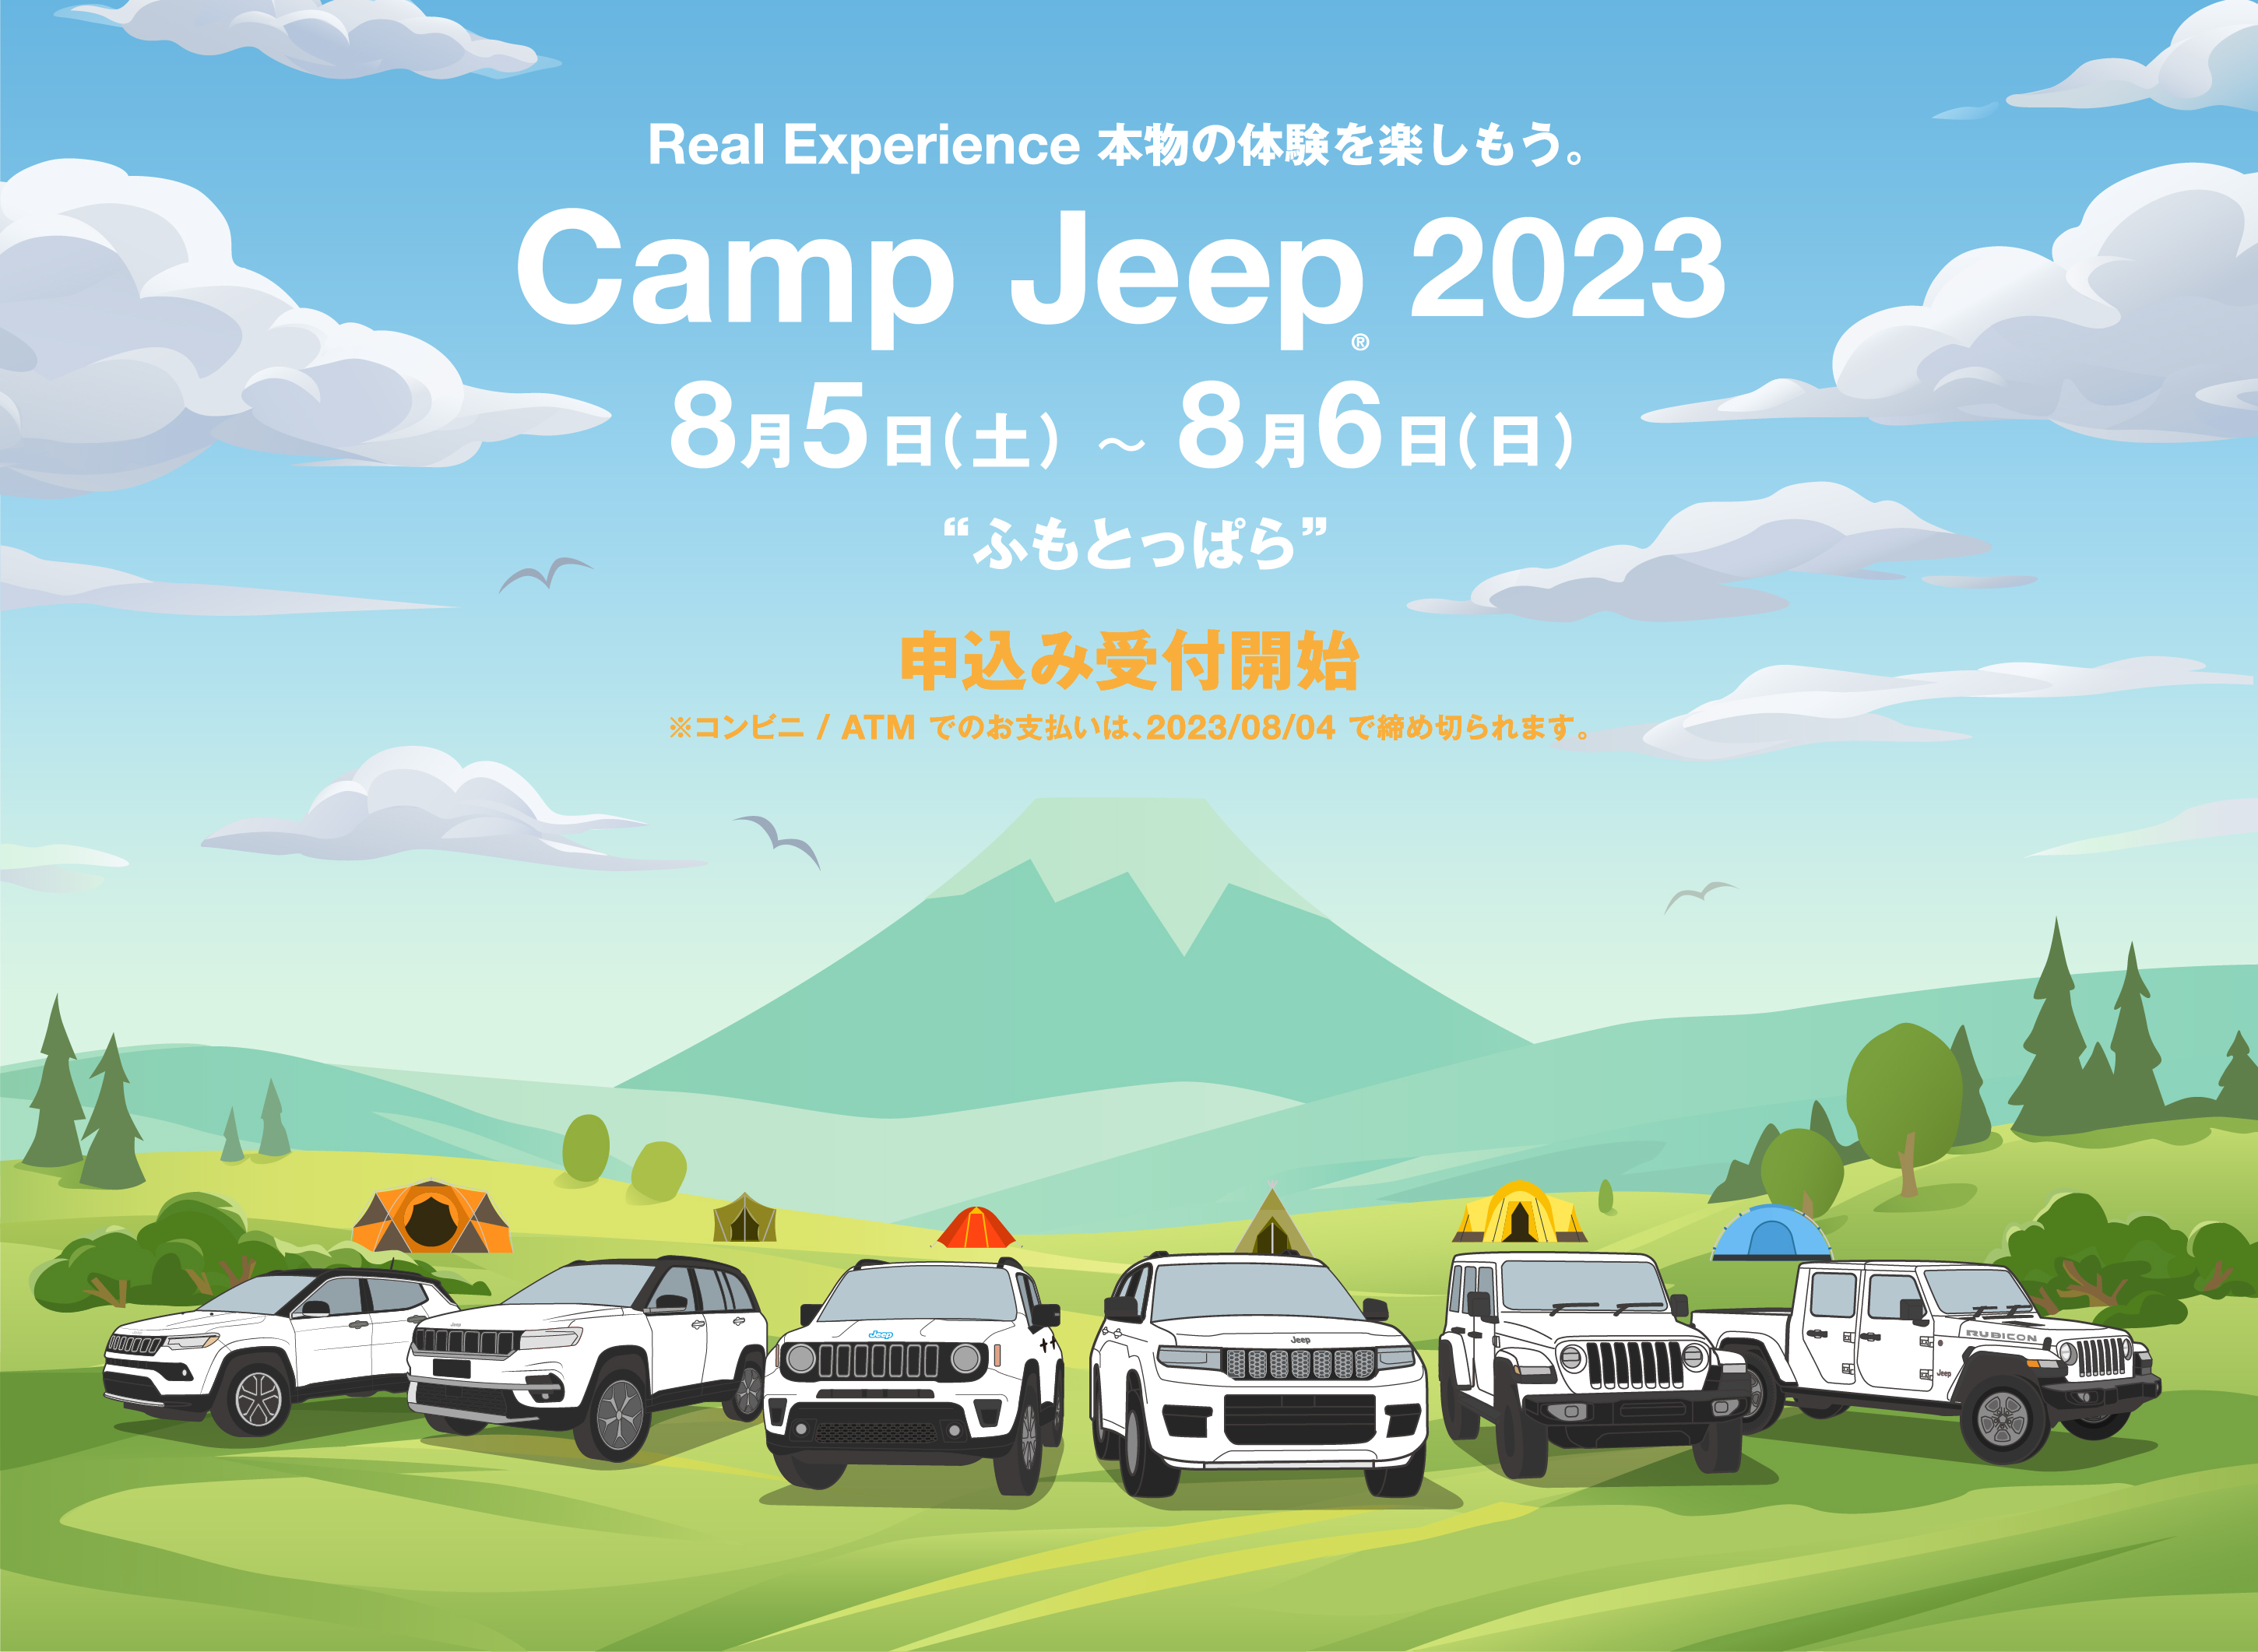 Camp Jeep 2023